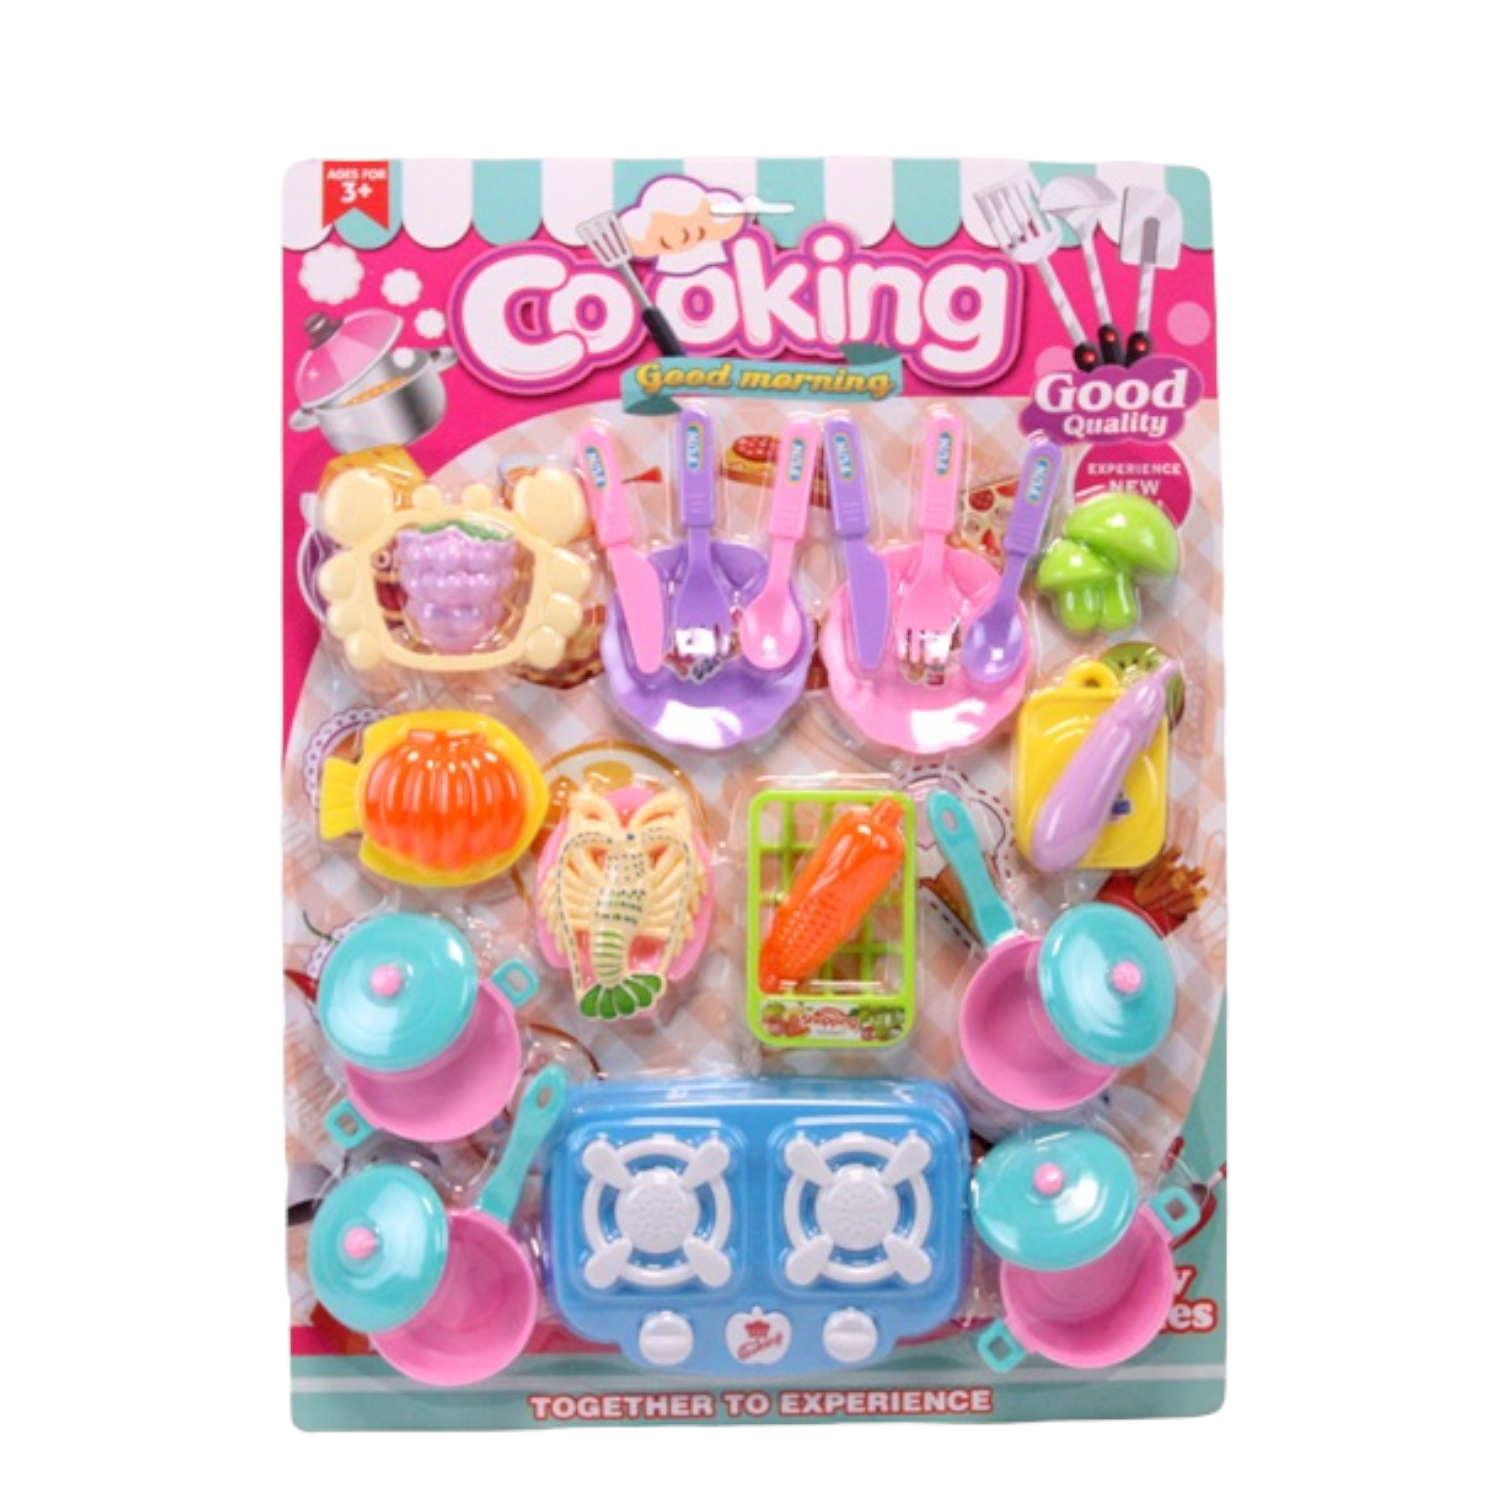 Kids Kitchen Game Toy Set